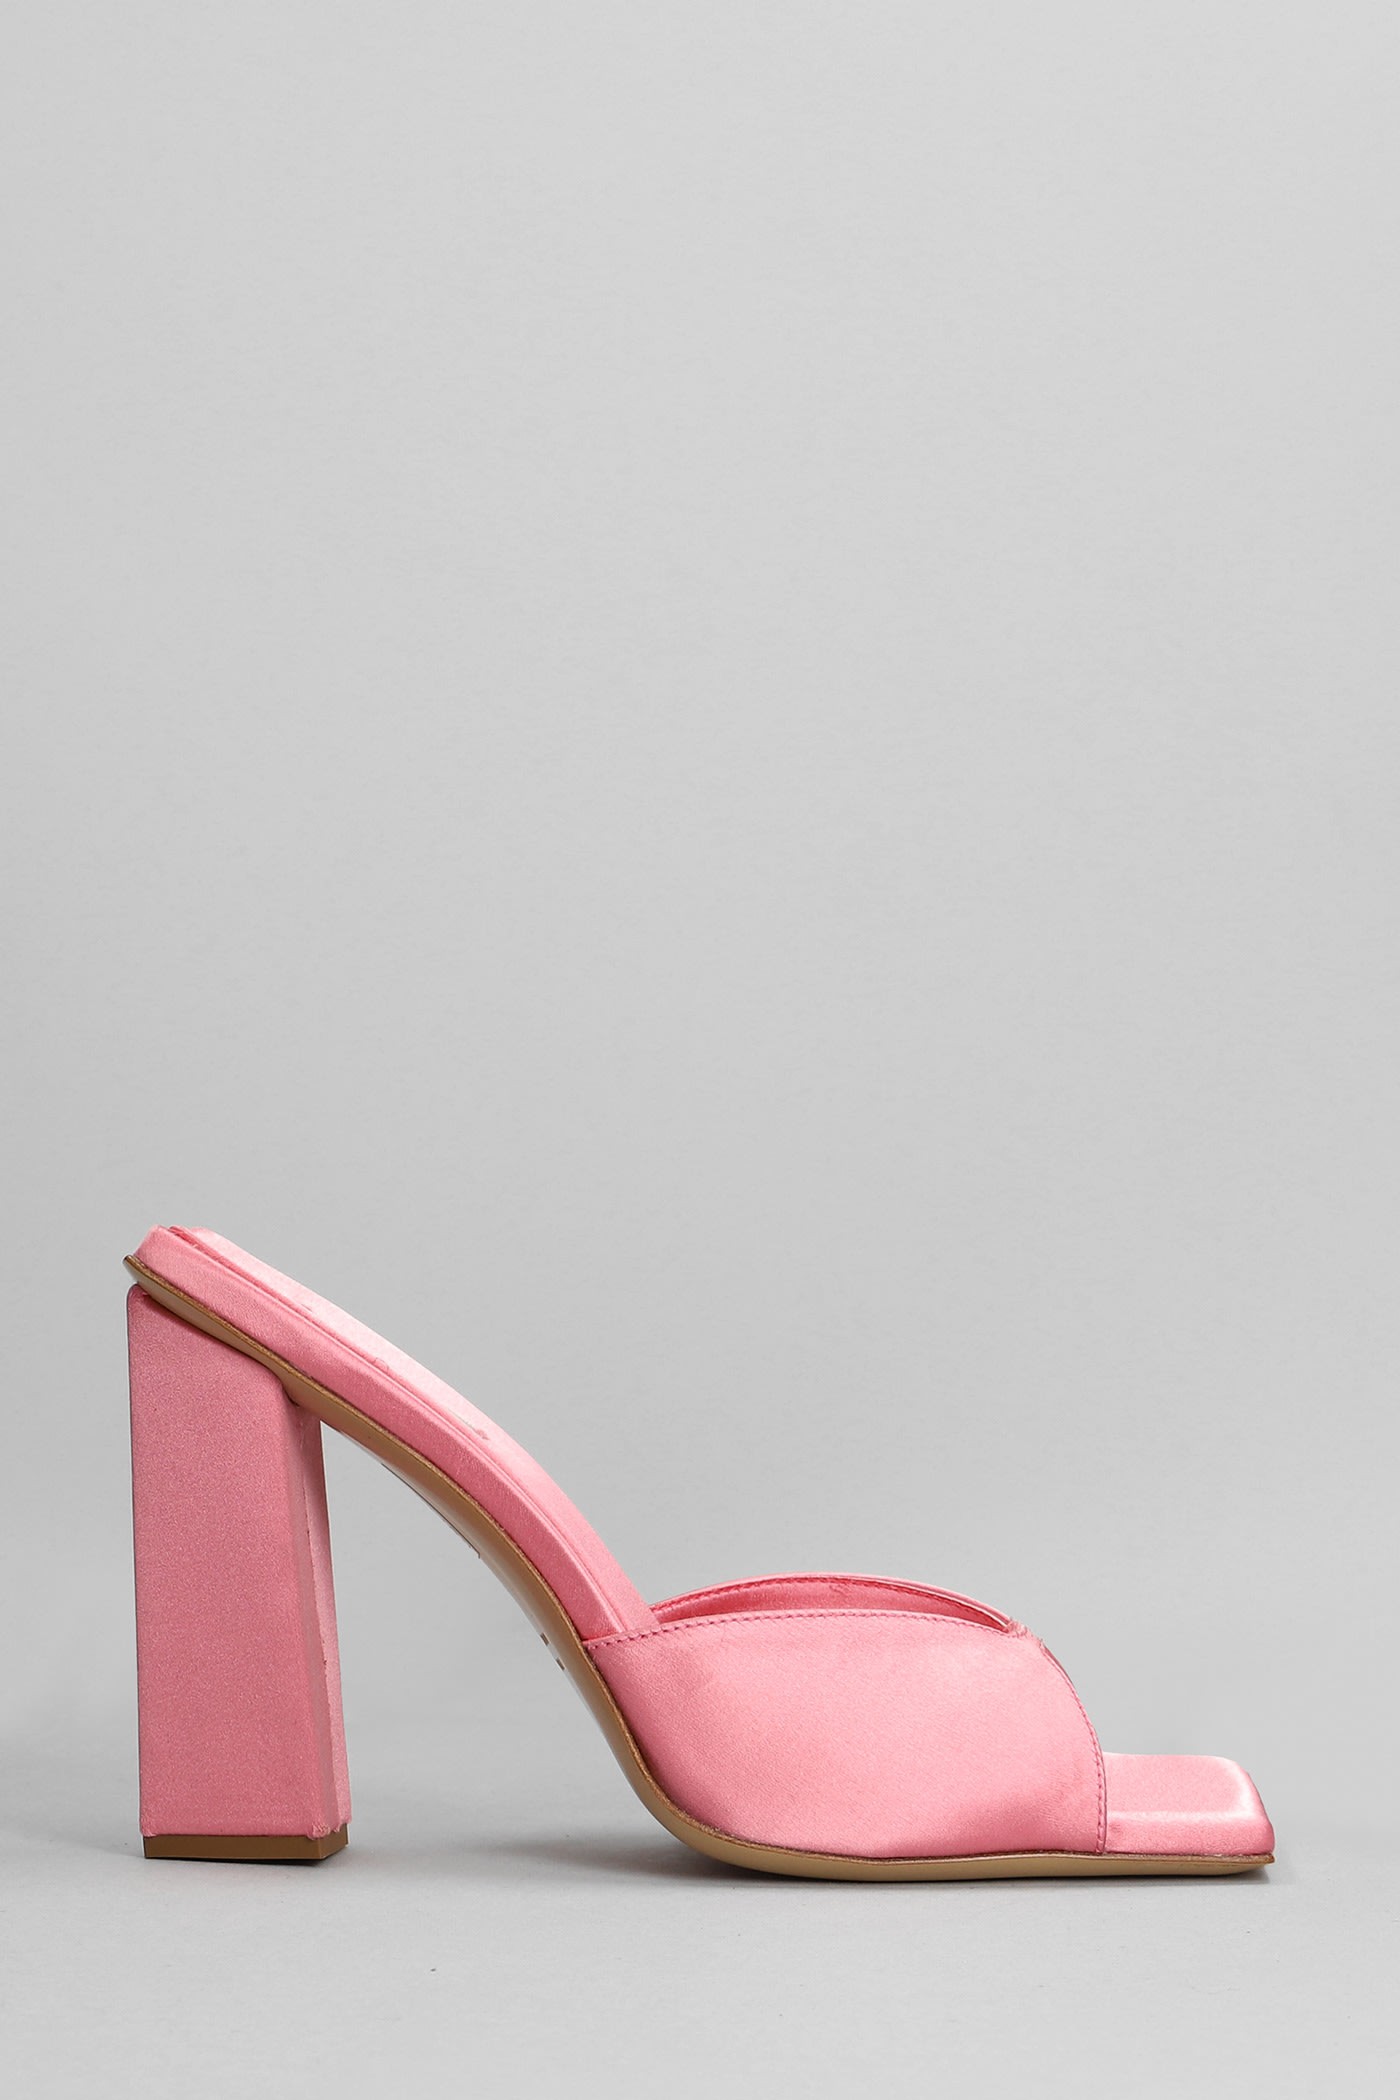 Gia X Rhw Rosie 14r Sandals In Rose-pink Satin